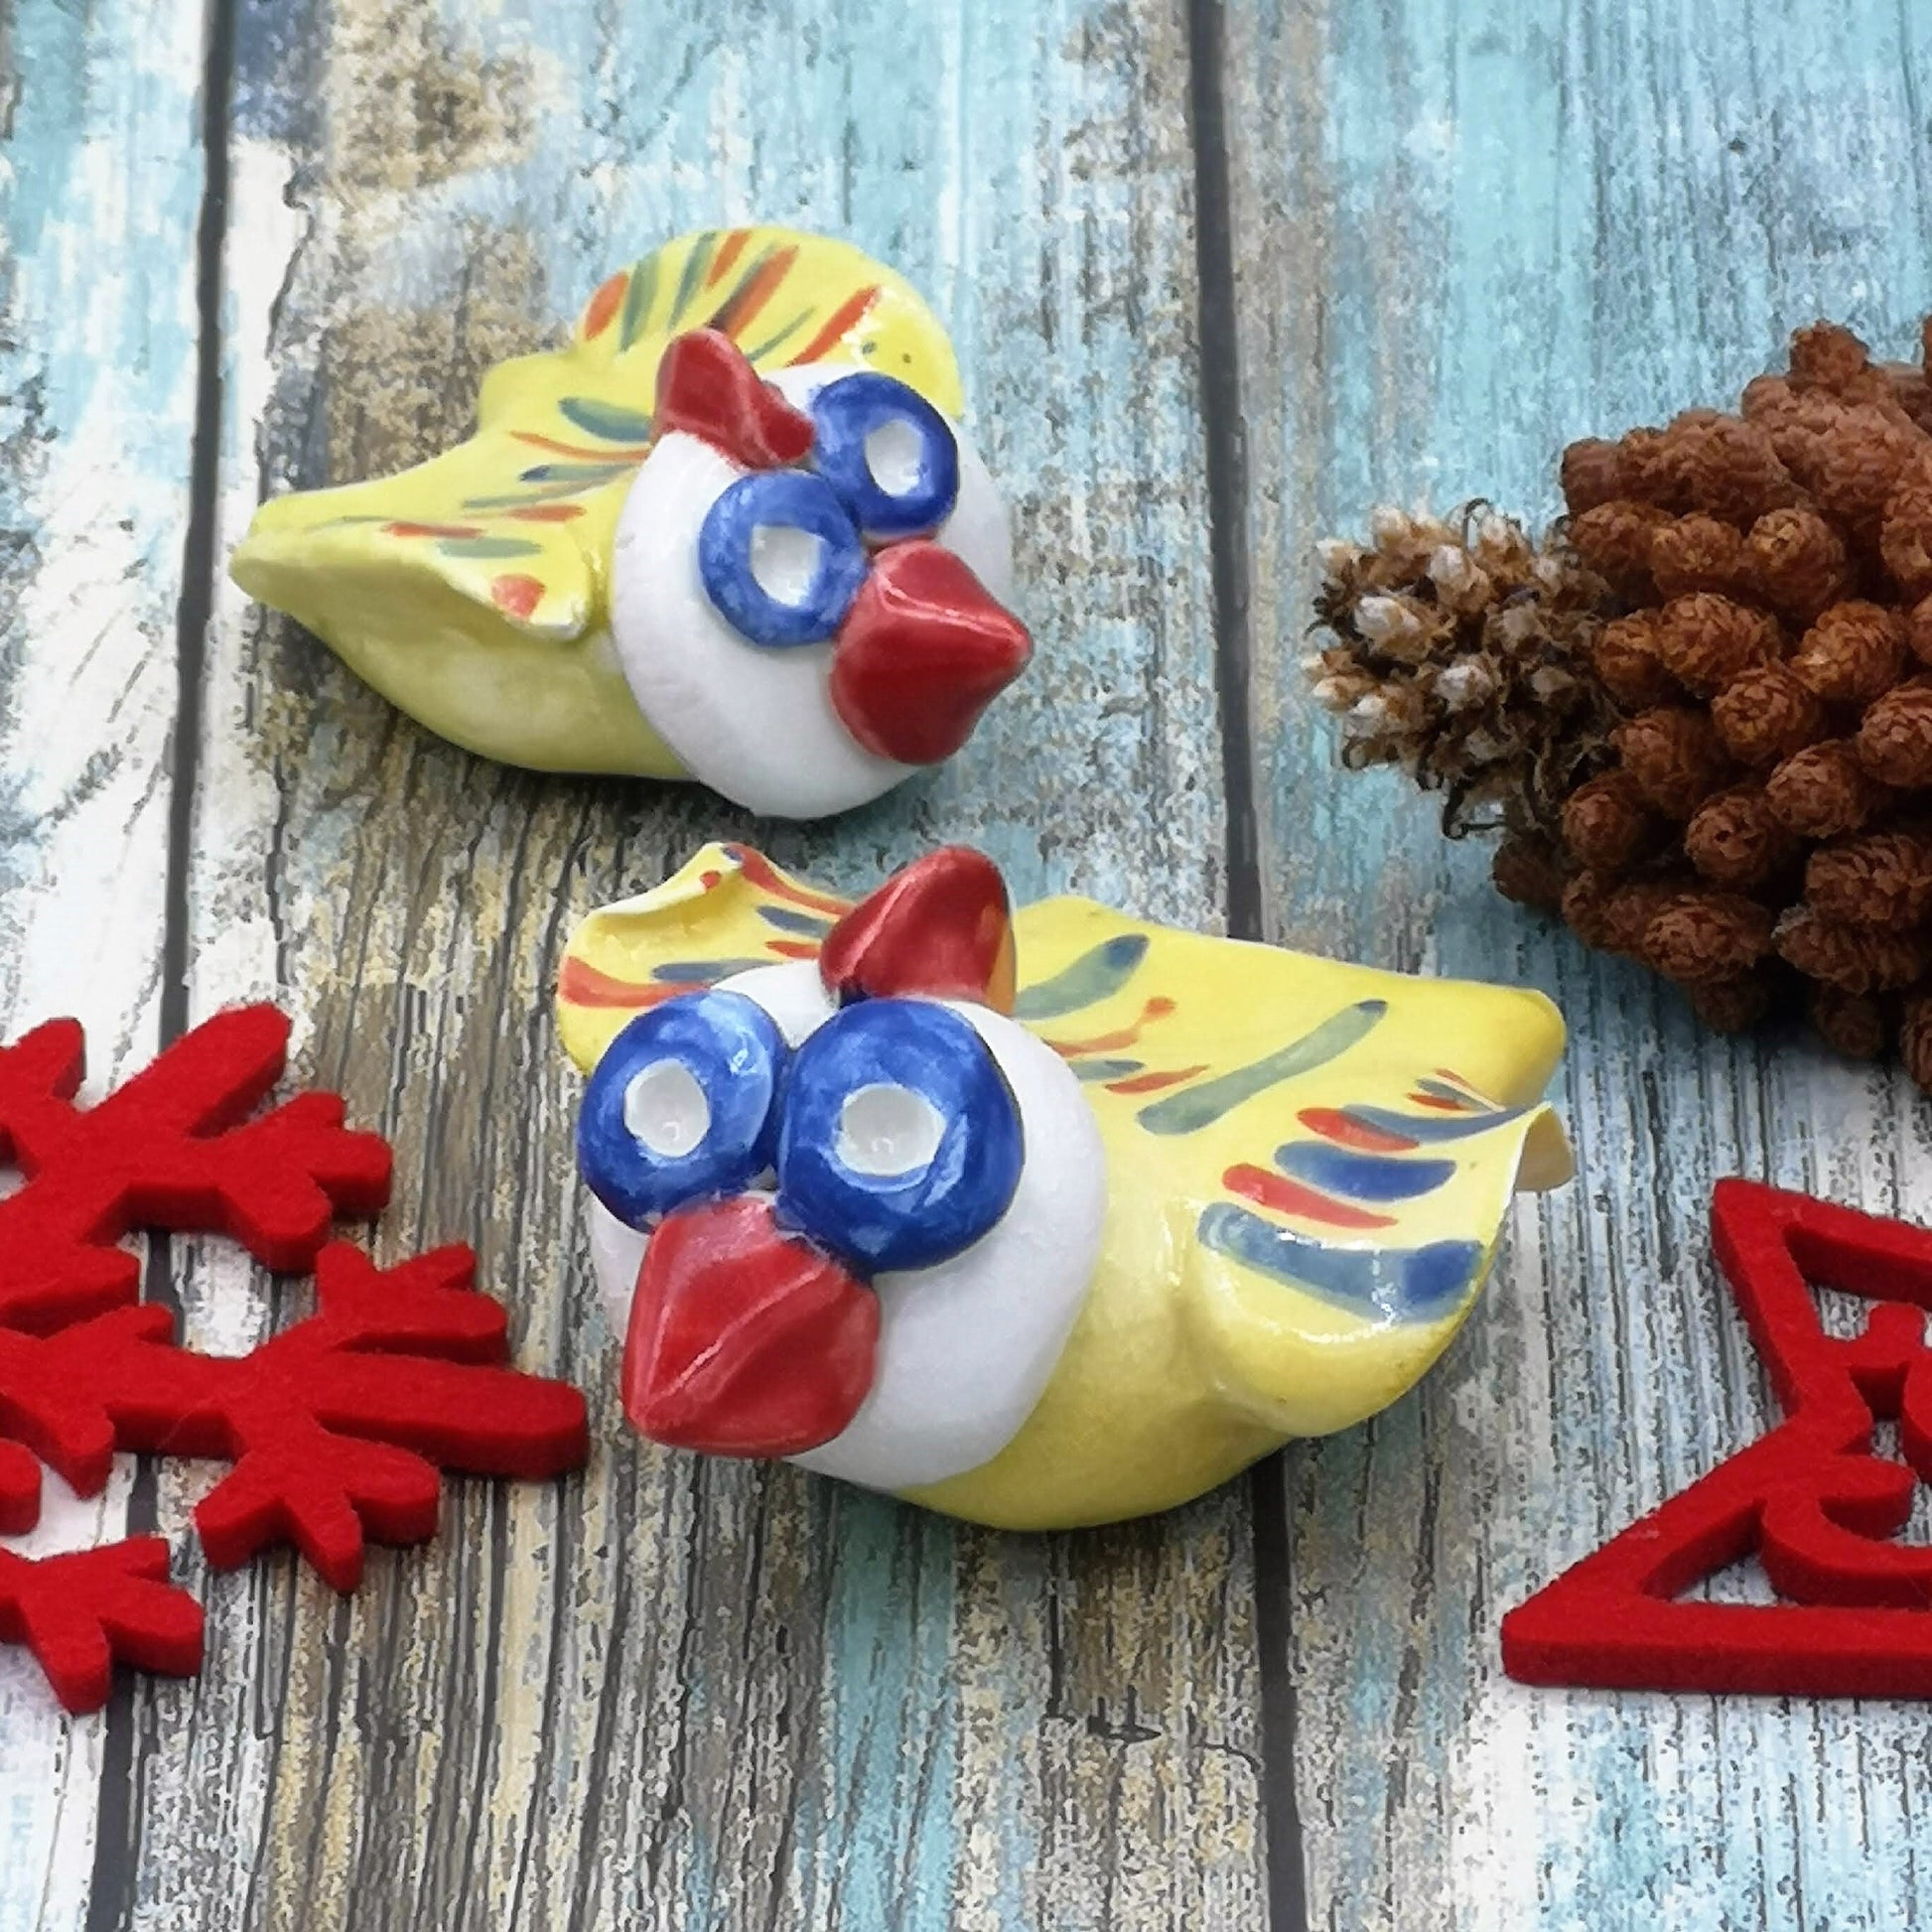 Handmade Ceramic Bird Sculpture Hand Painted Yellow, Modern Rooster Figurine, Cute Clay Sculpture Chicken Gifts, Reusable Animal Cake Topper - Ceramica Ana Rafael